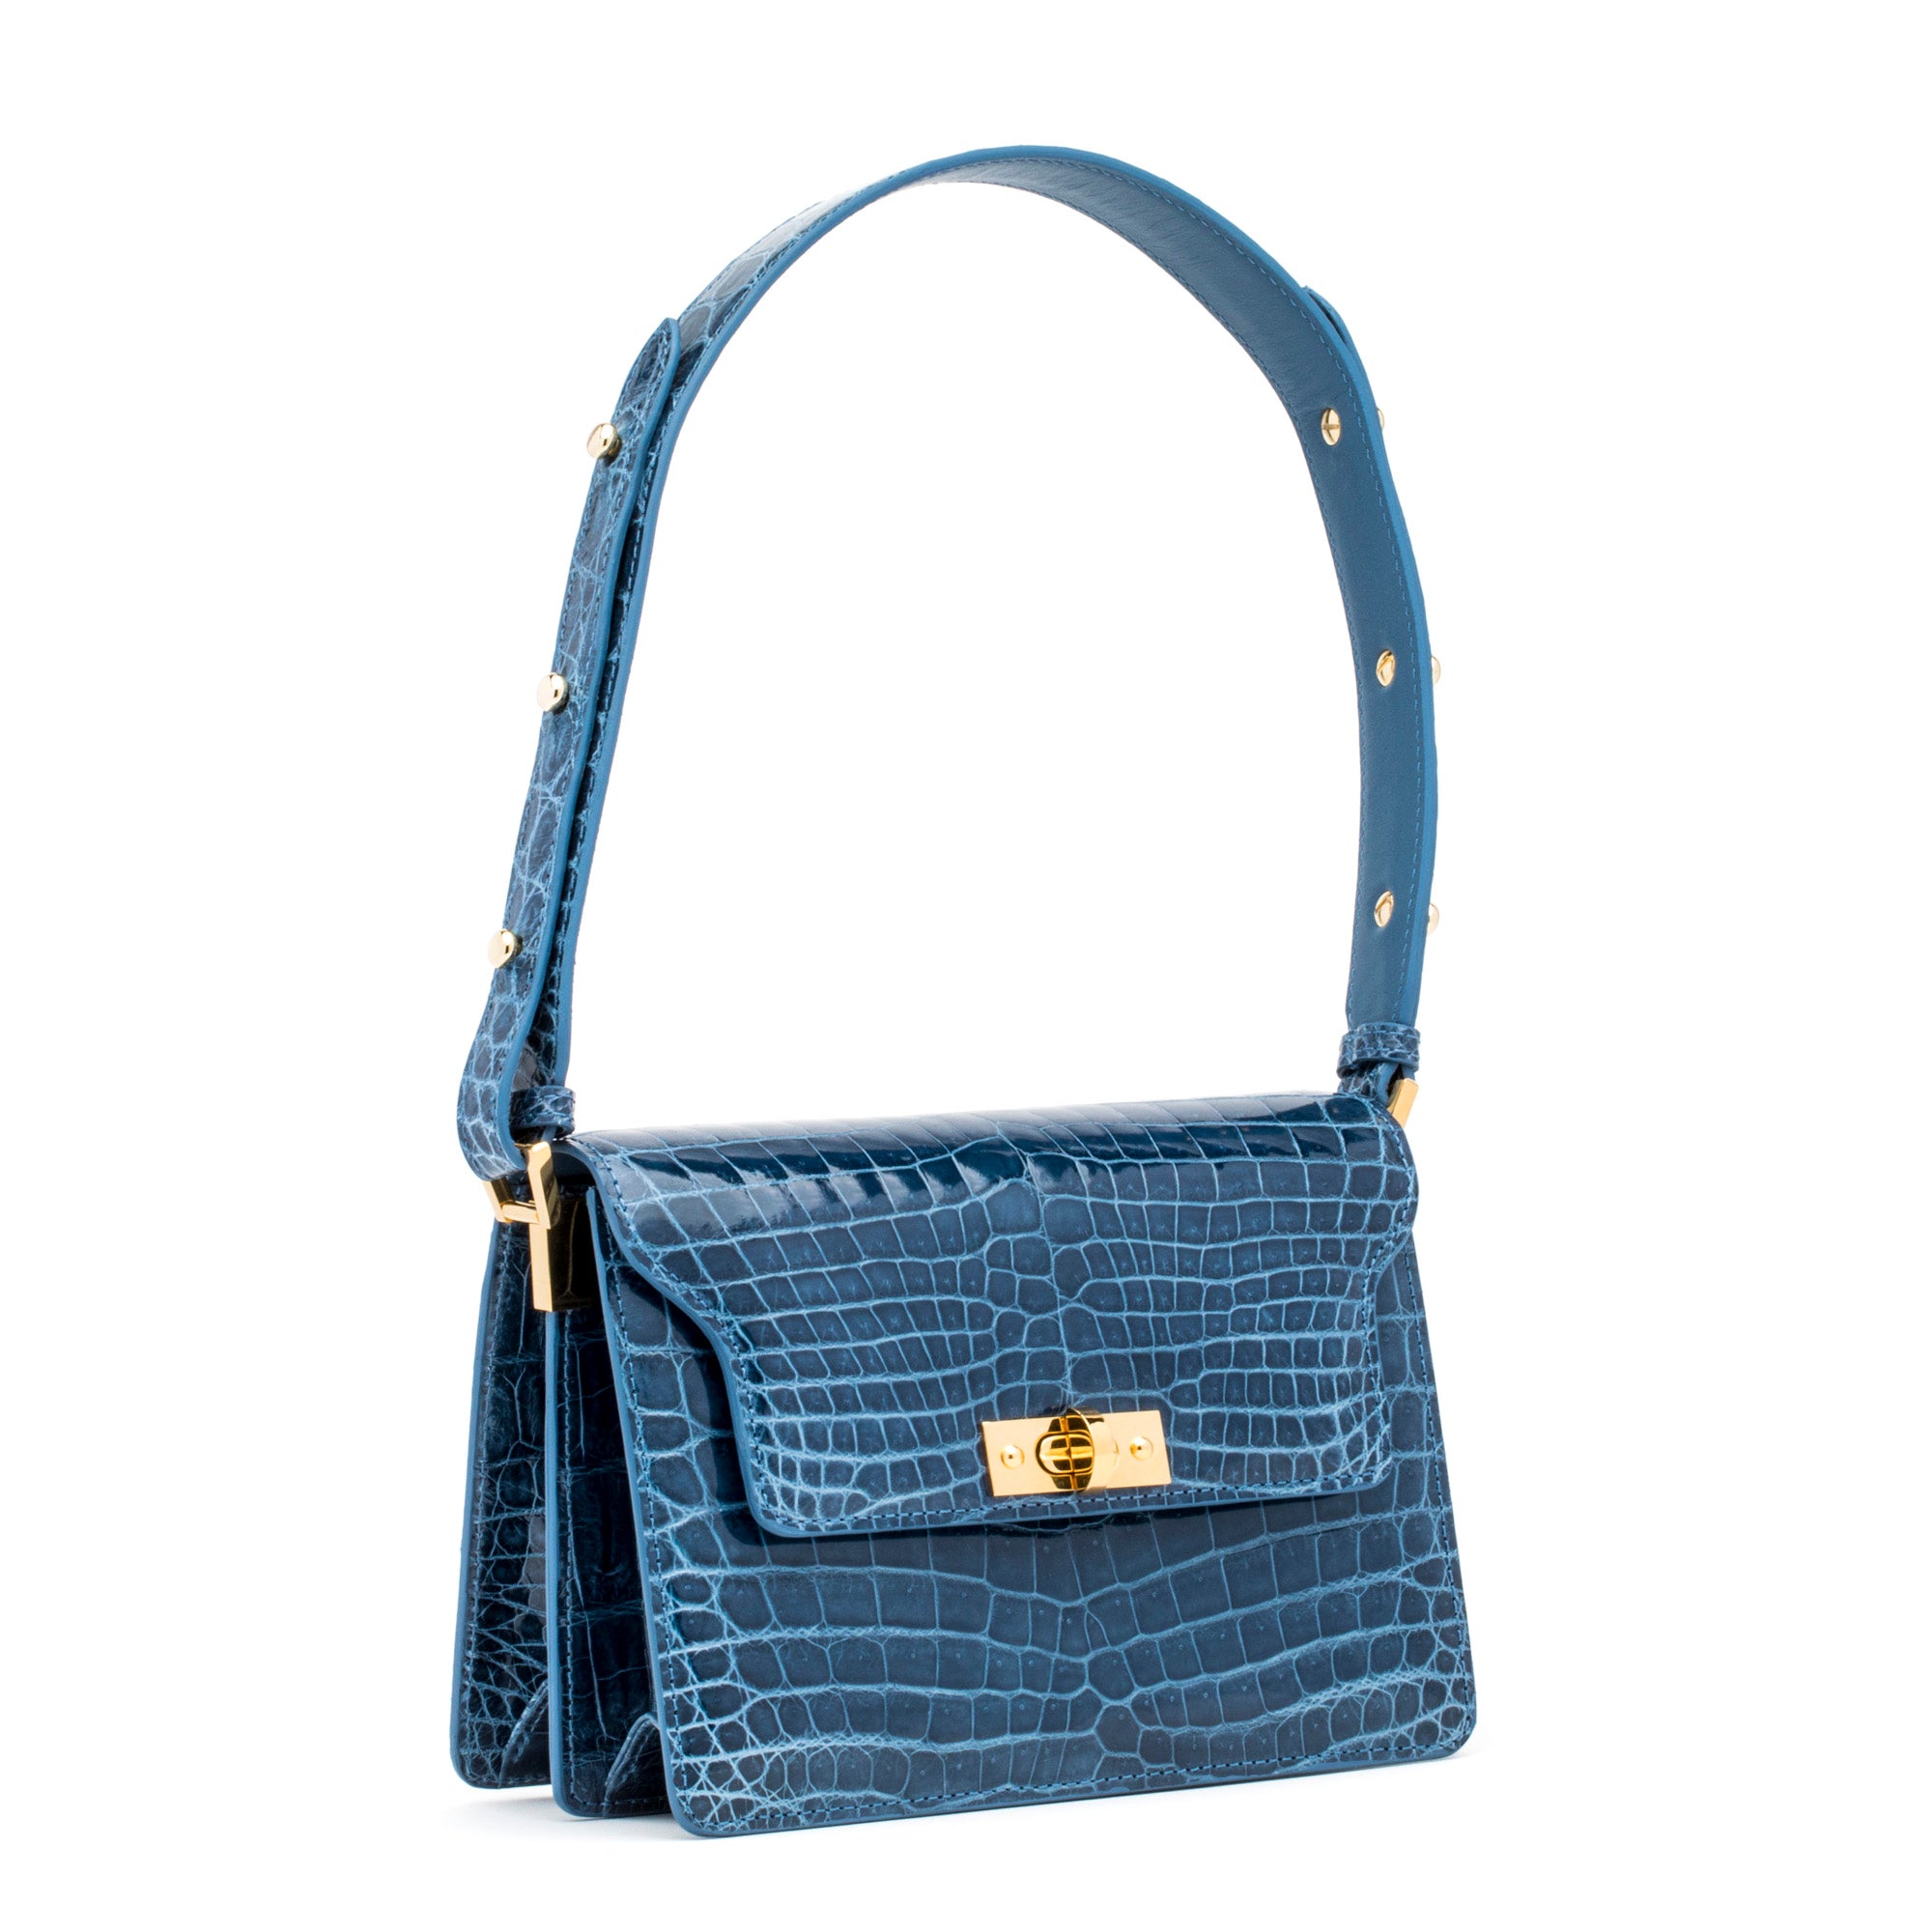 Metropolitan Handbag in Blue Jeans